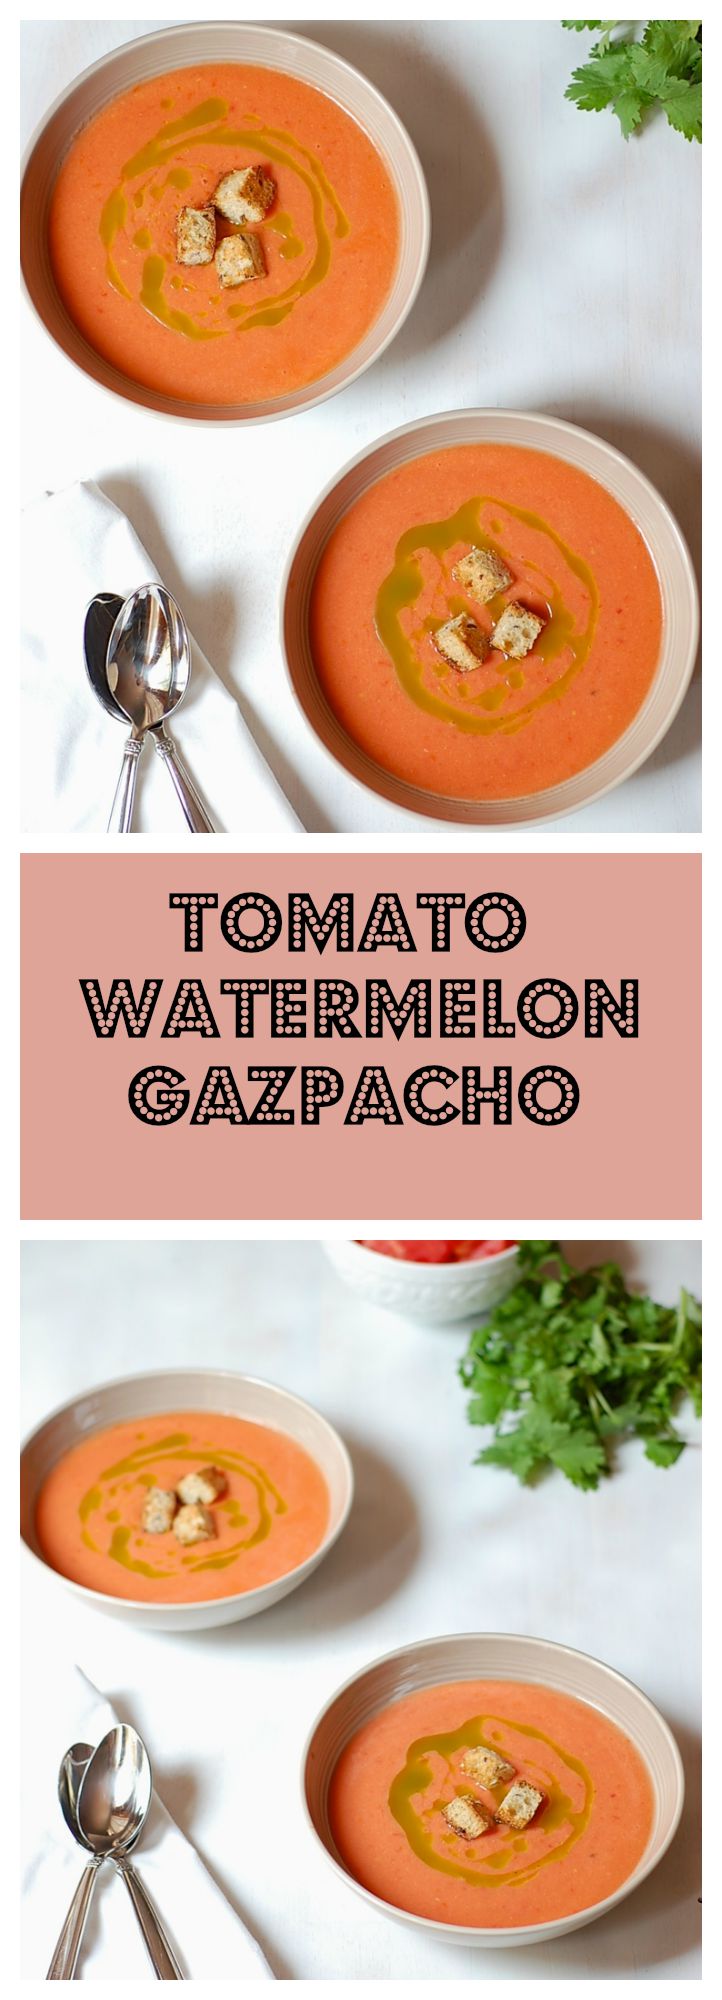 tomato watermelon gazpacho pinterest pin